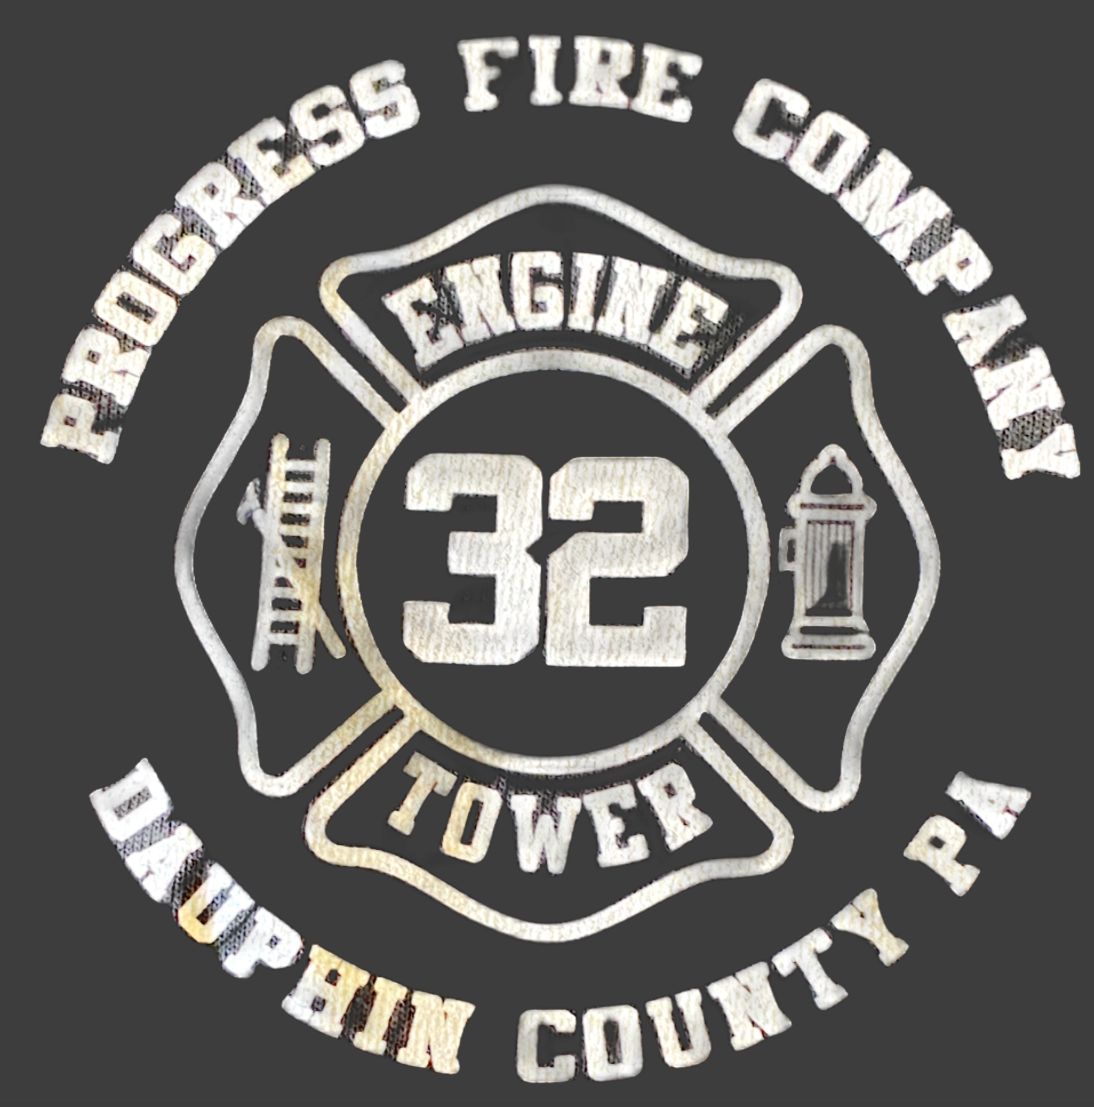 Progress Fire Company Engine 32 t-shirt - Charcoal